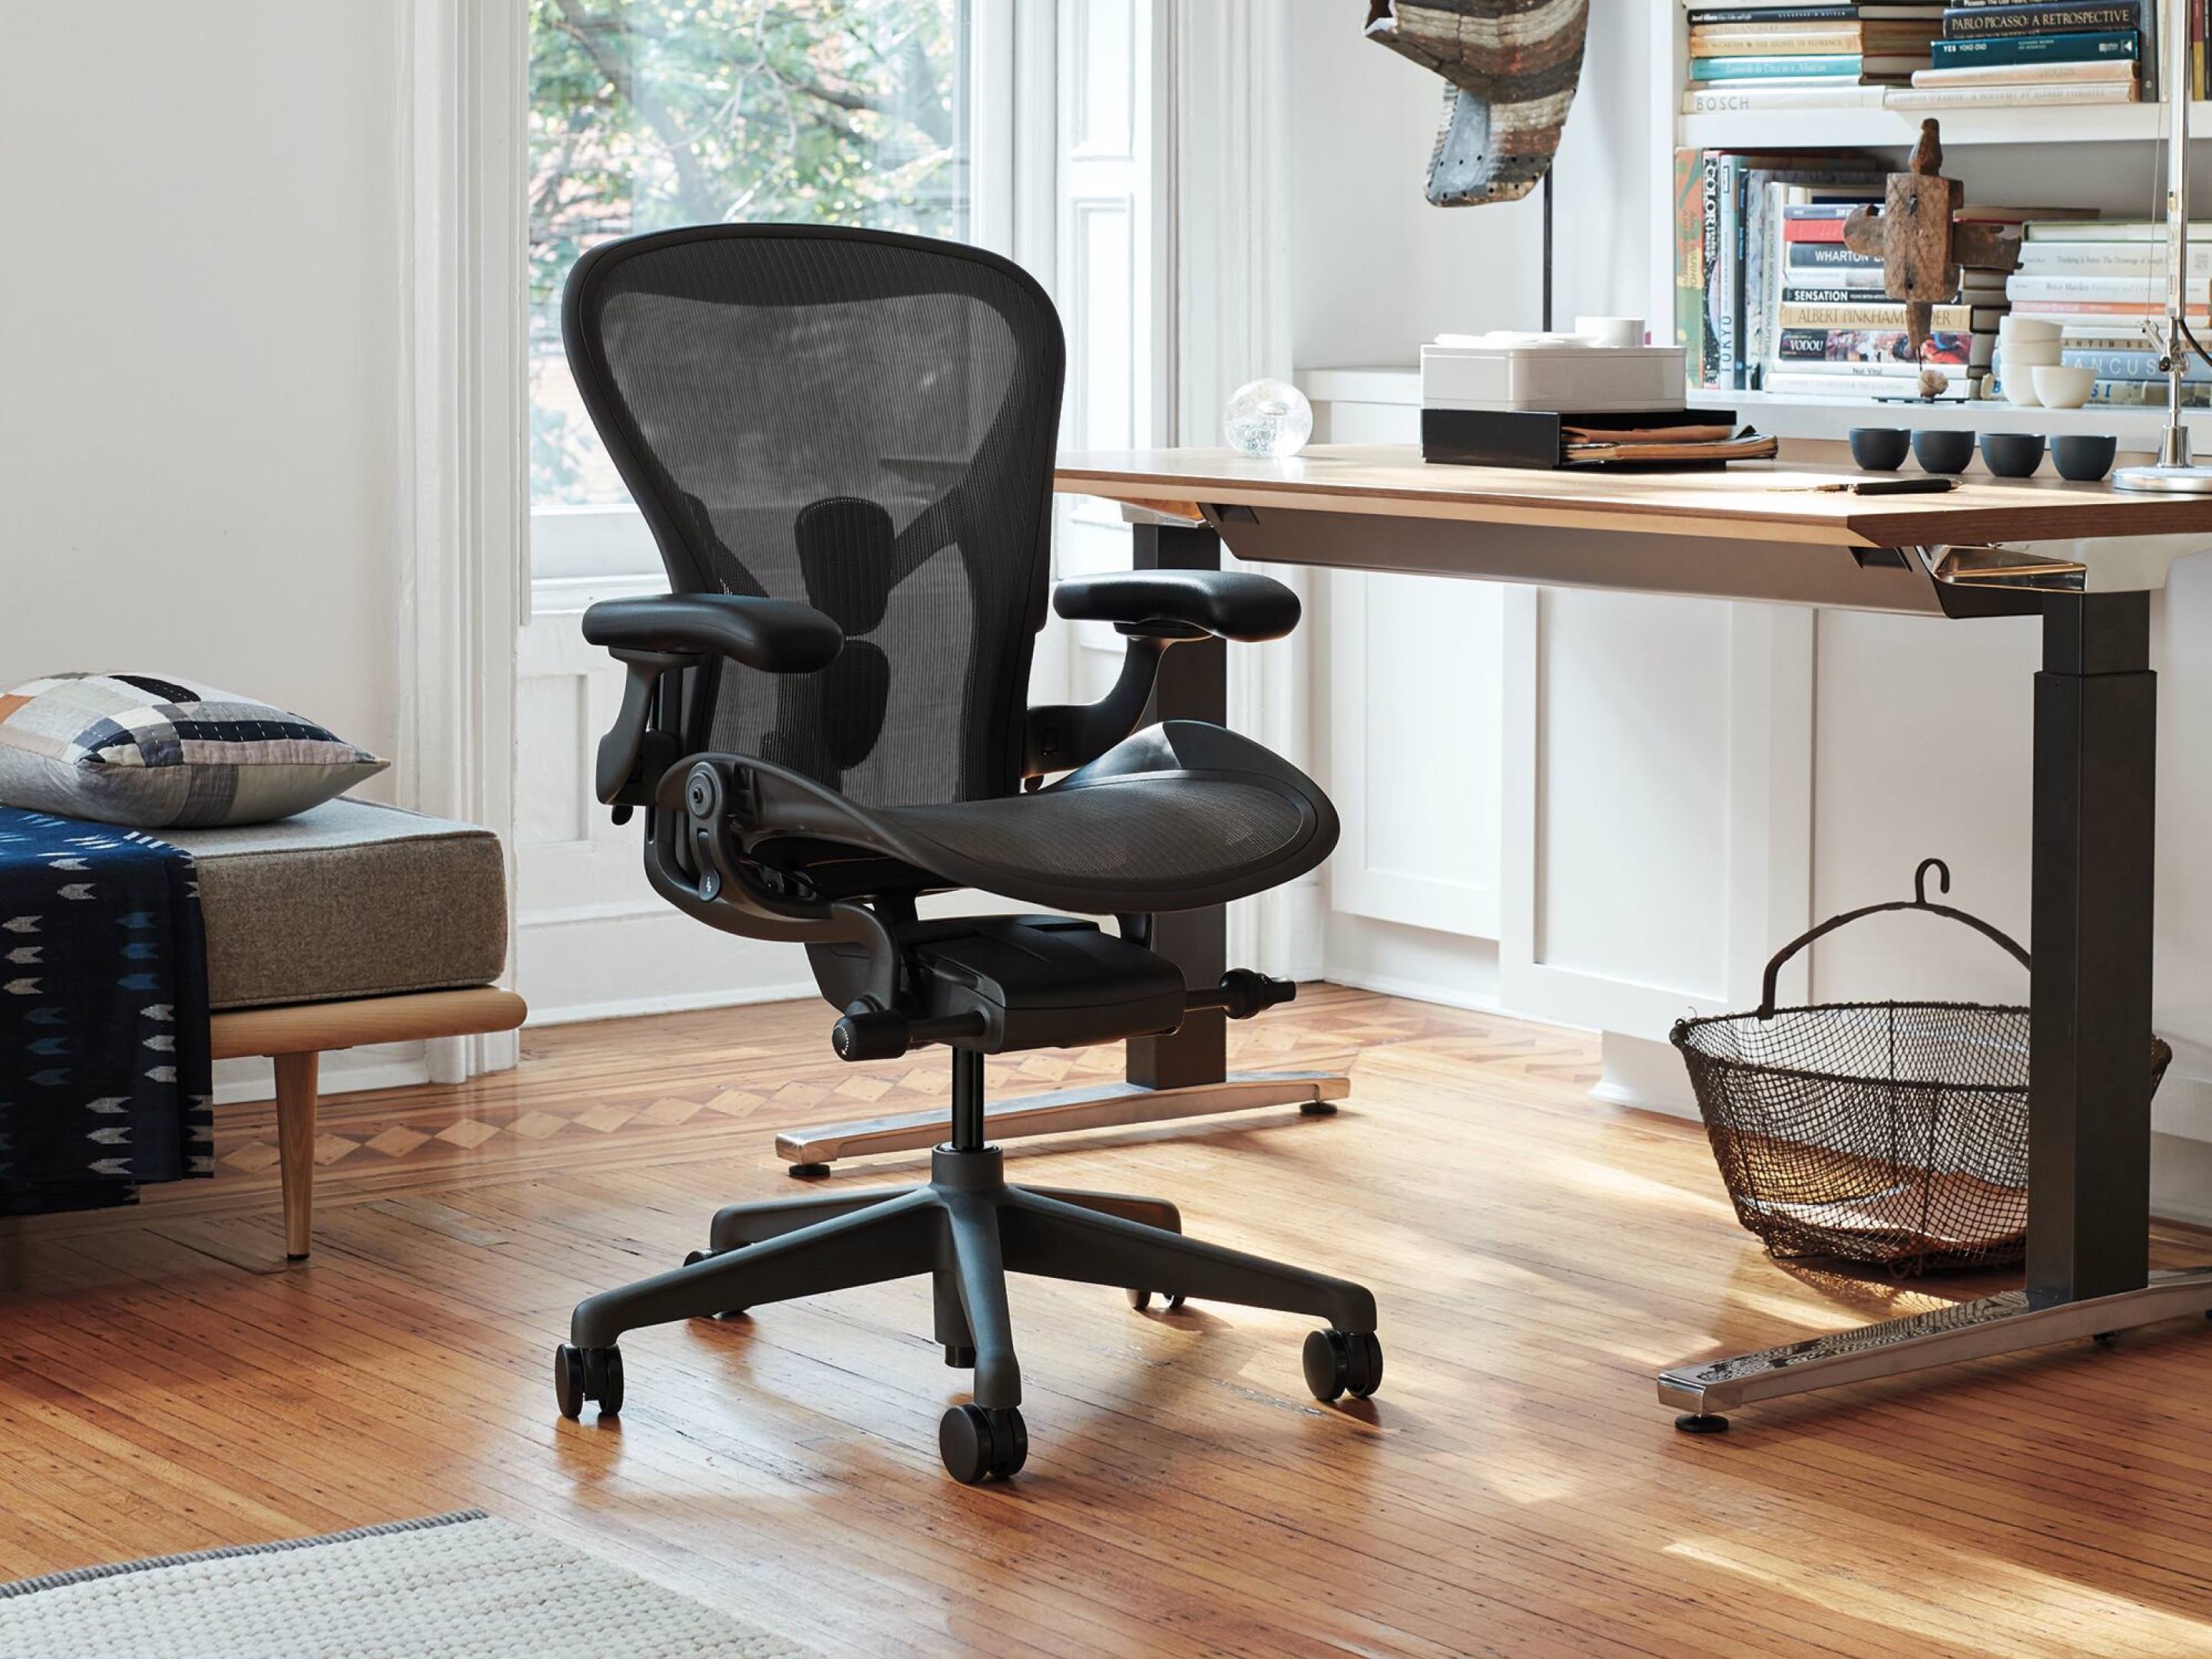 Refurbished & Used Aeron Chairs - Basic Gray Aeron Chair by Herman Miller